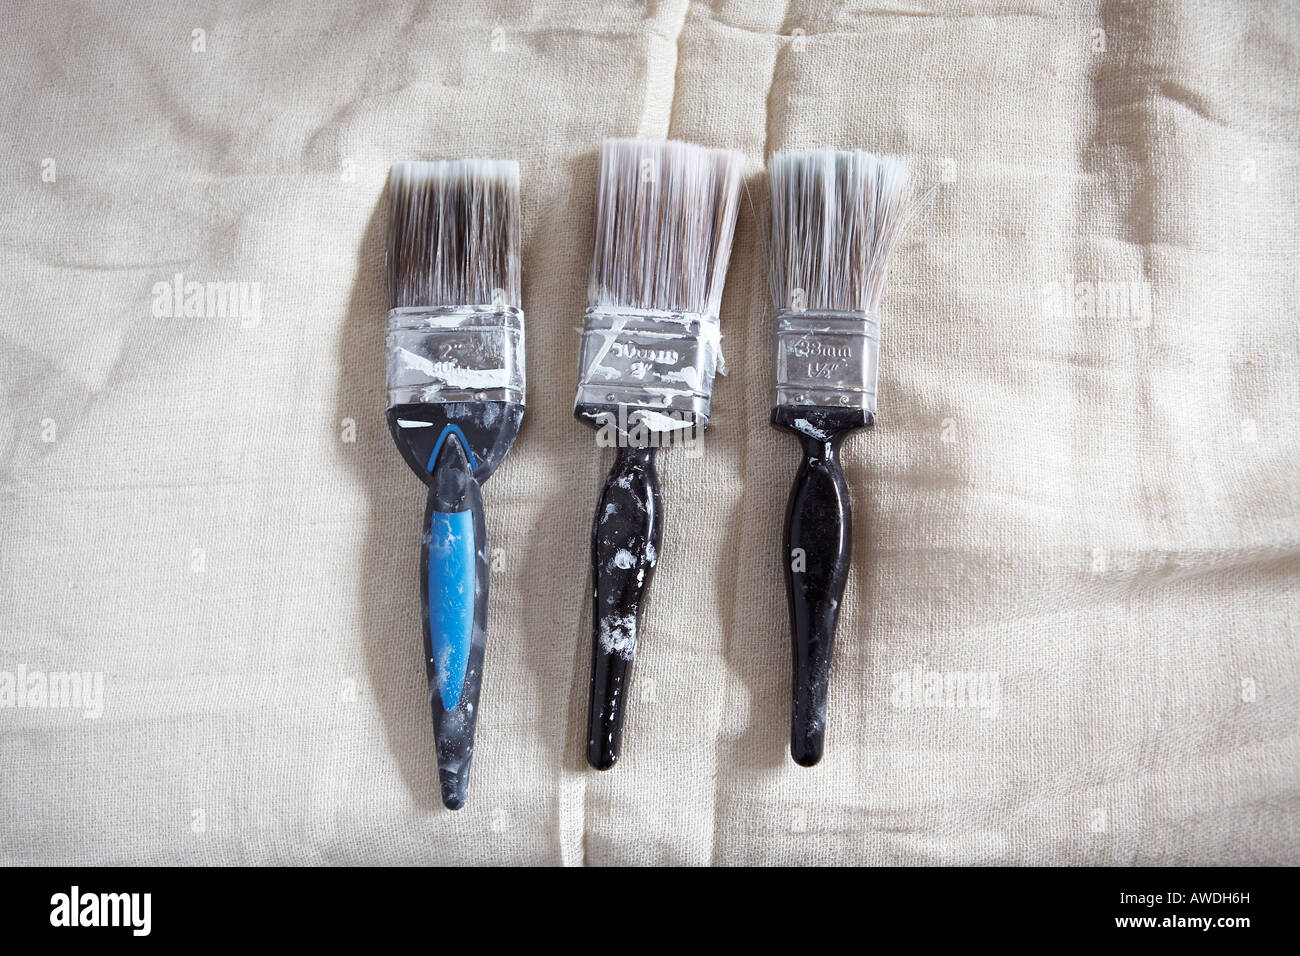 Row of three used paintbrushes on dust sheet Stock Photo